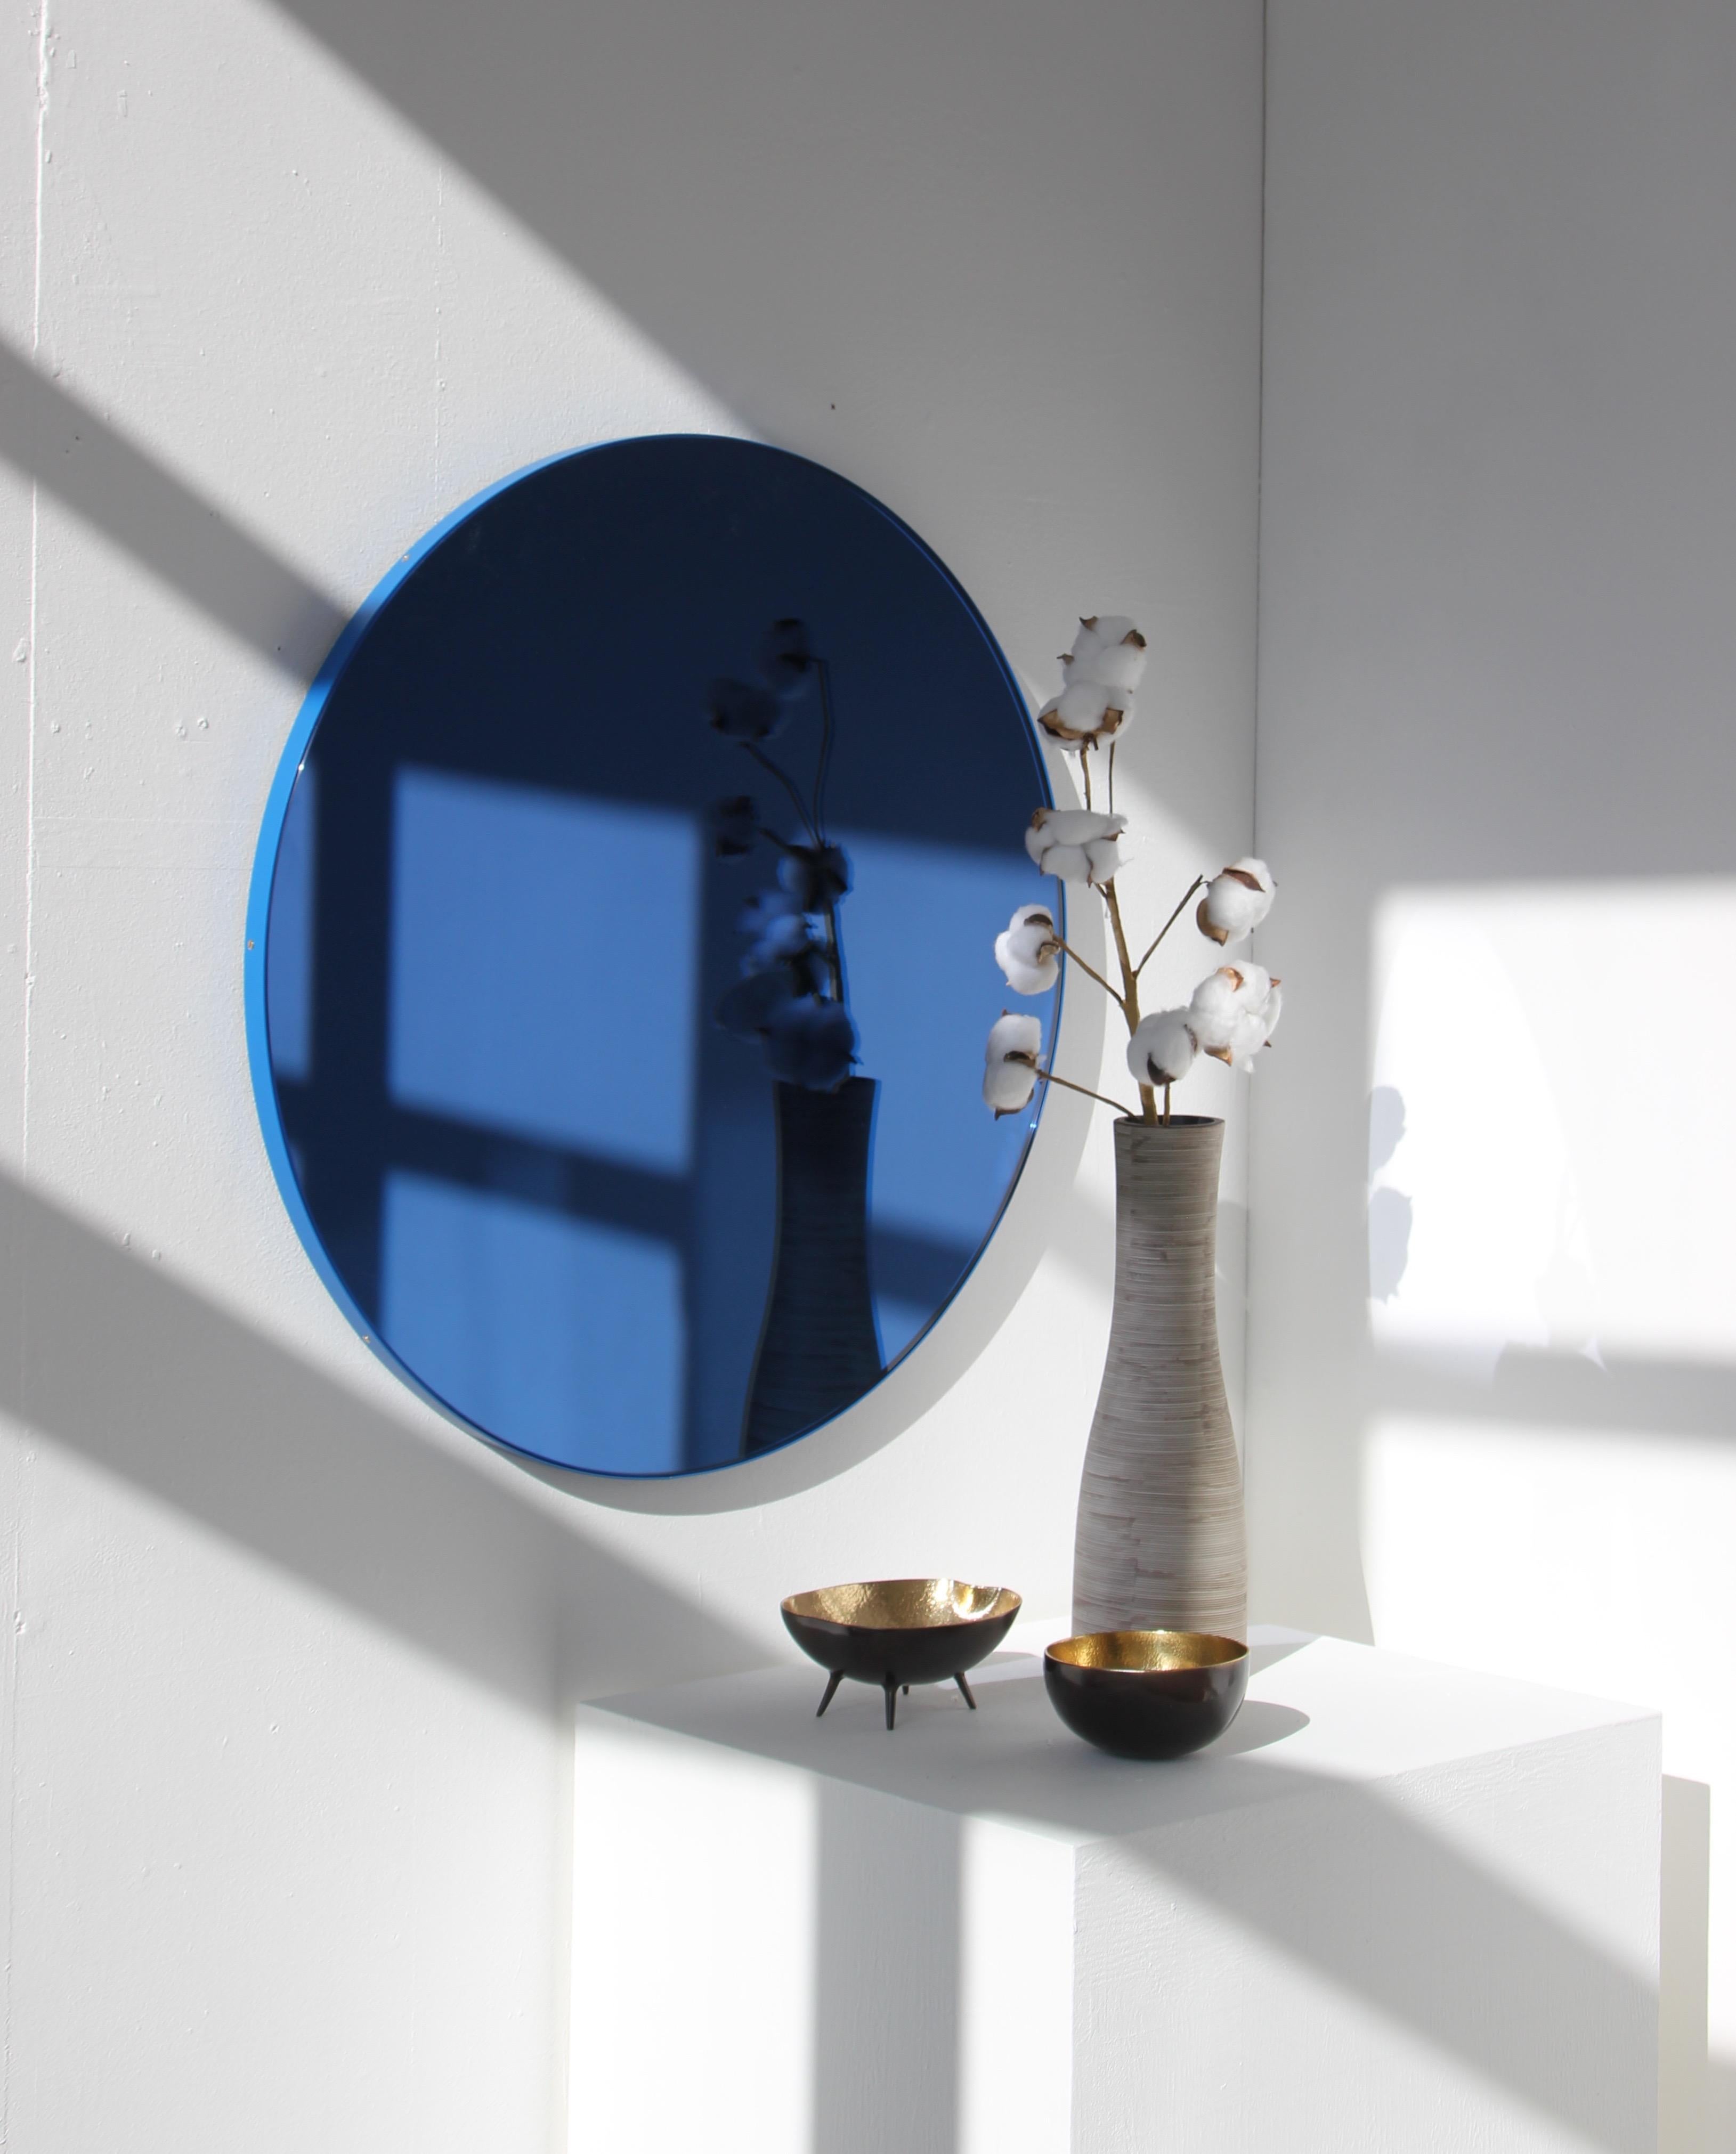 Organique Miroir contemporain rond Orbis teinté bleu avec cadre bleu, standard en vente